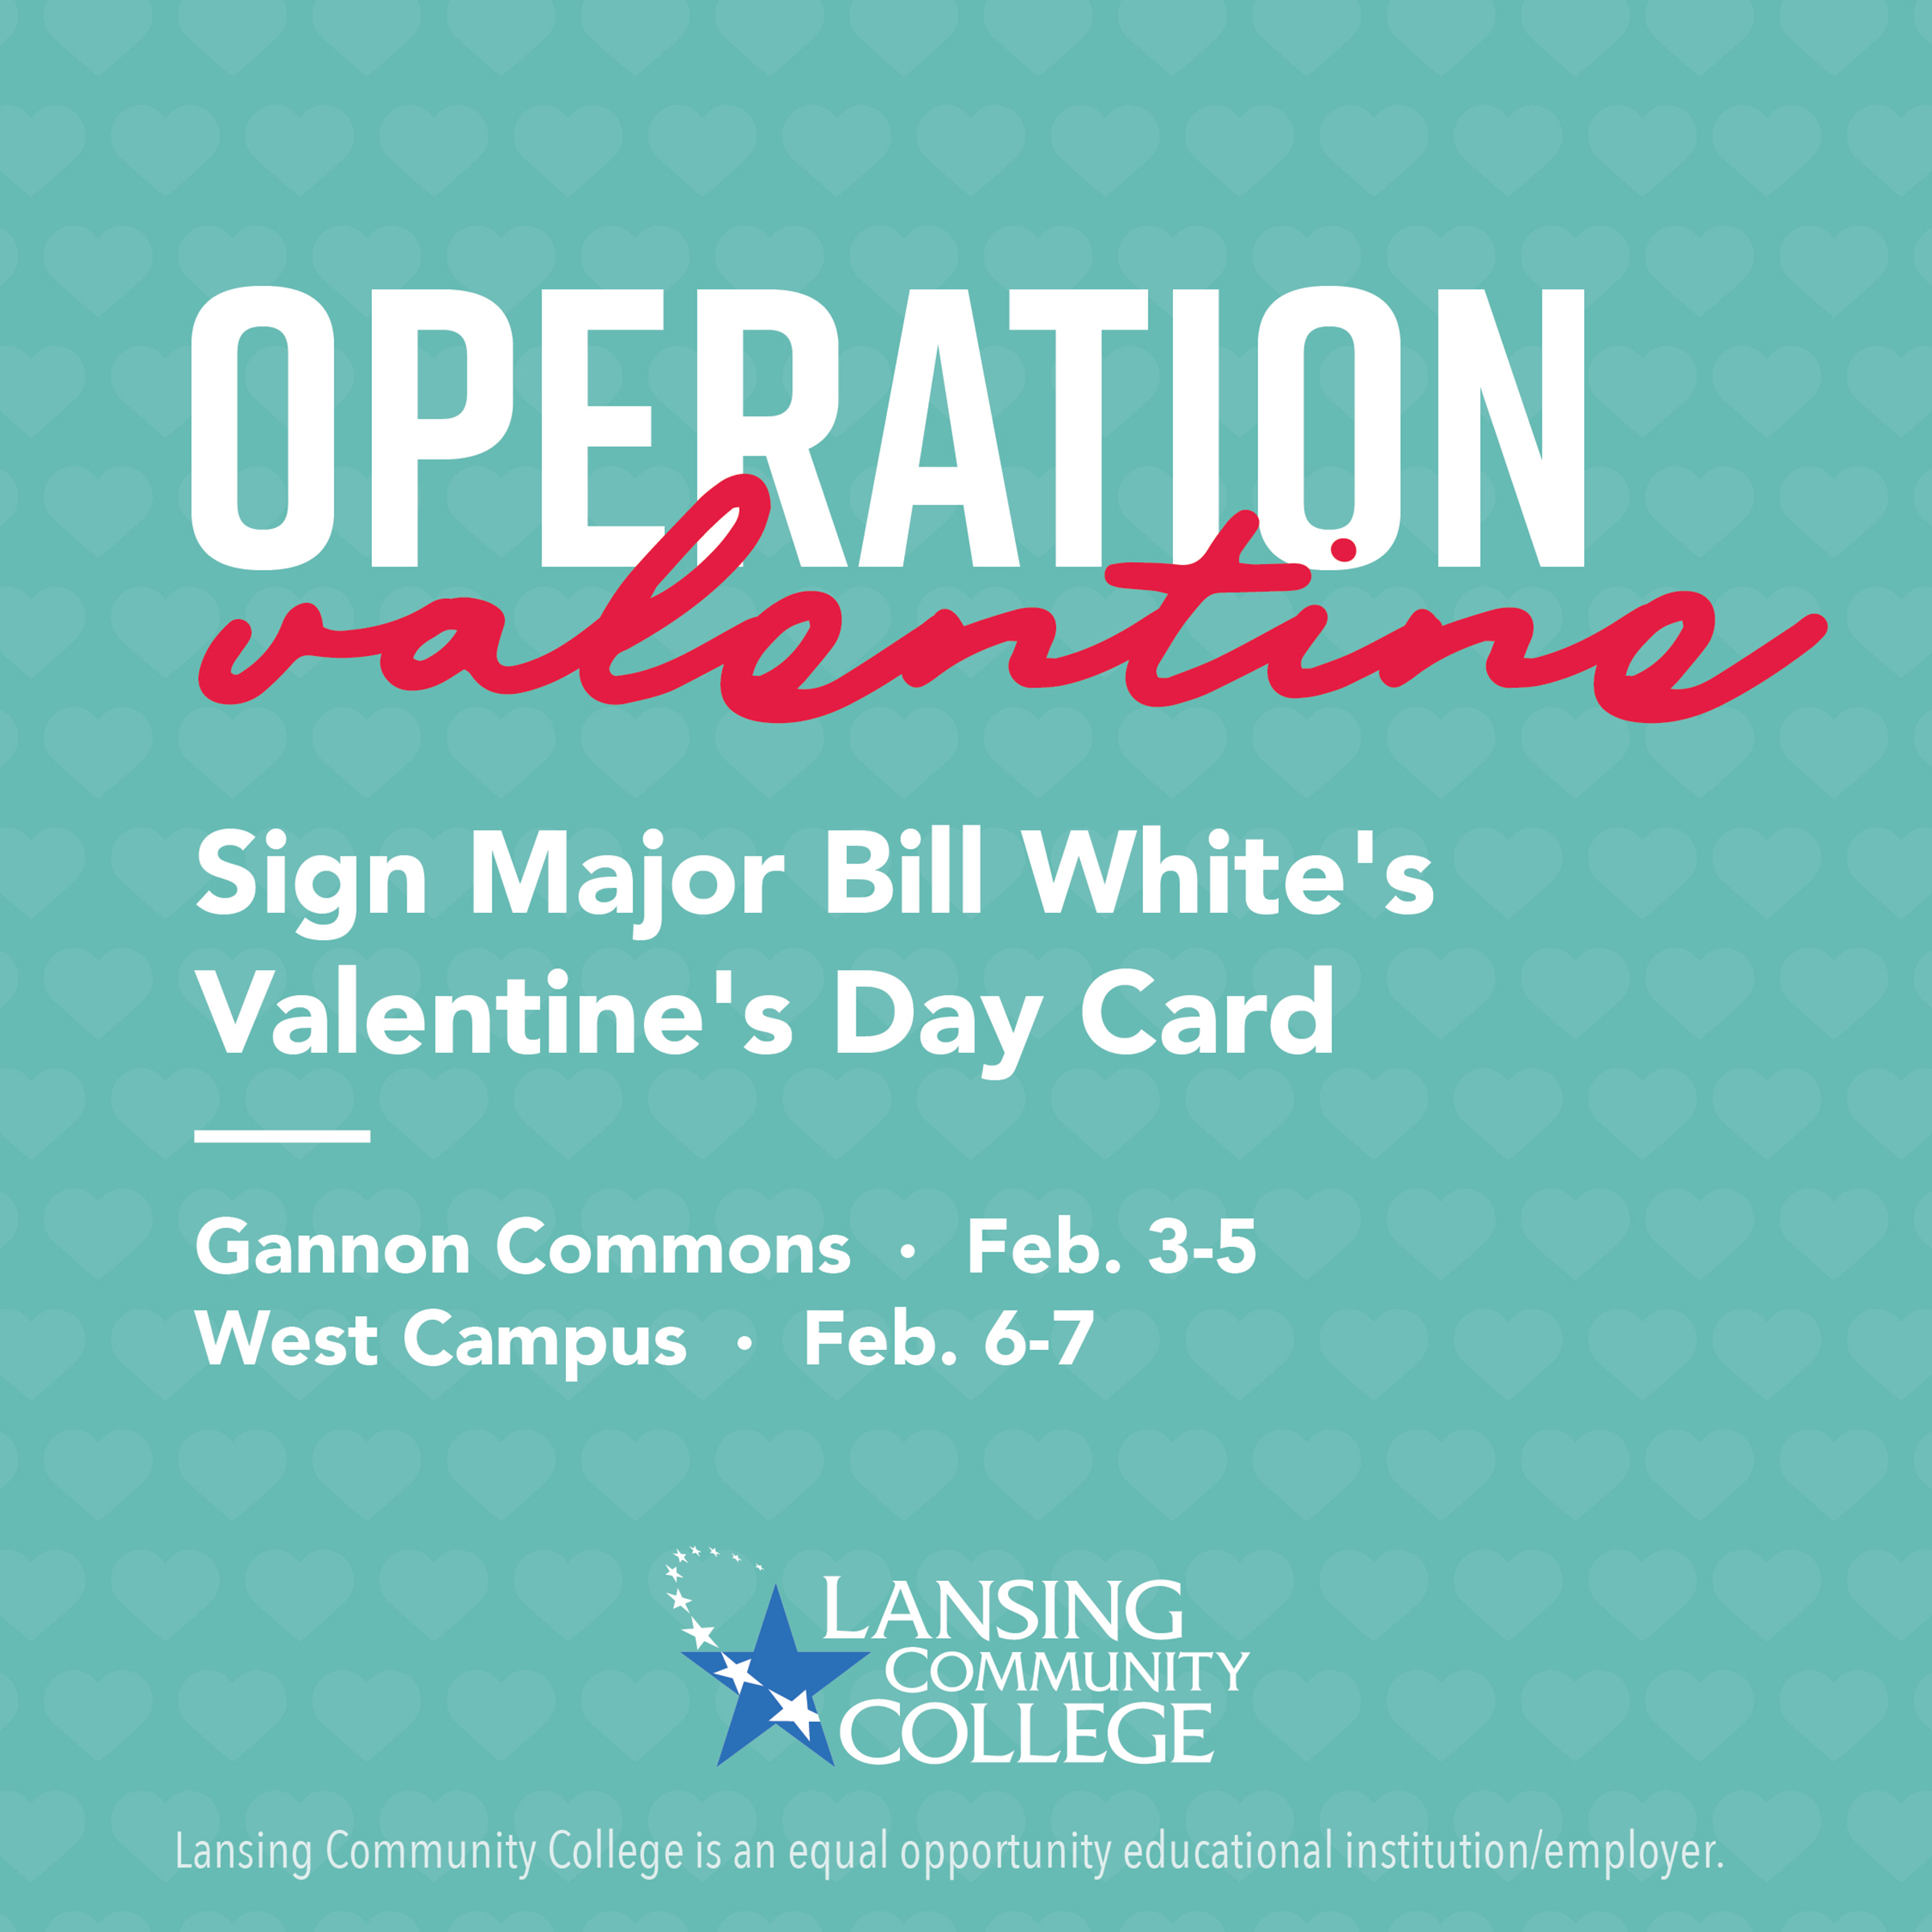 Operation Valentine - Sign Major Bill White's Valentine's Day Card